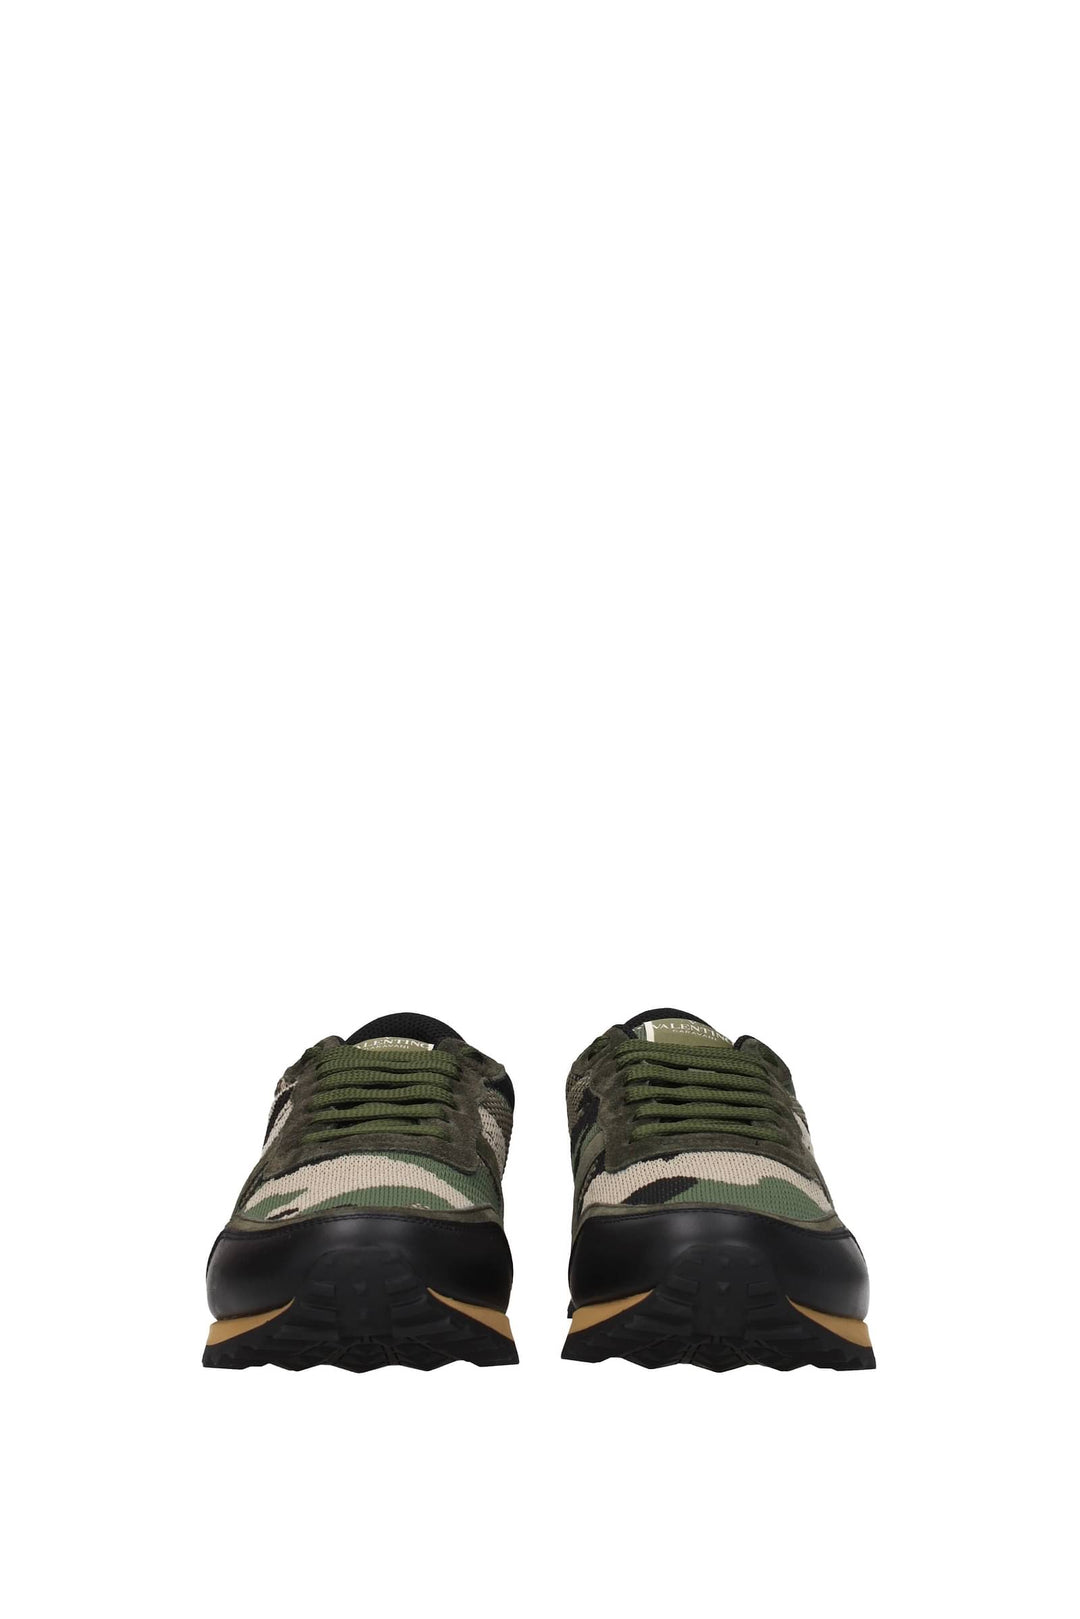 Sneakers Tessuto Verde Verde Militare - Valentino Garavani - Uomo